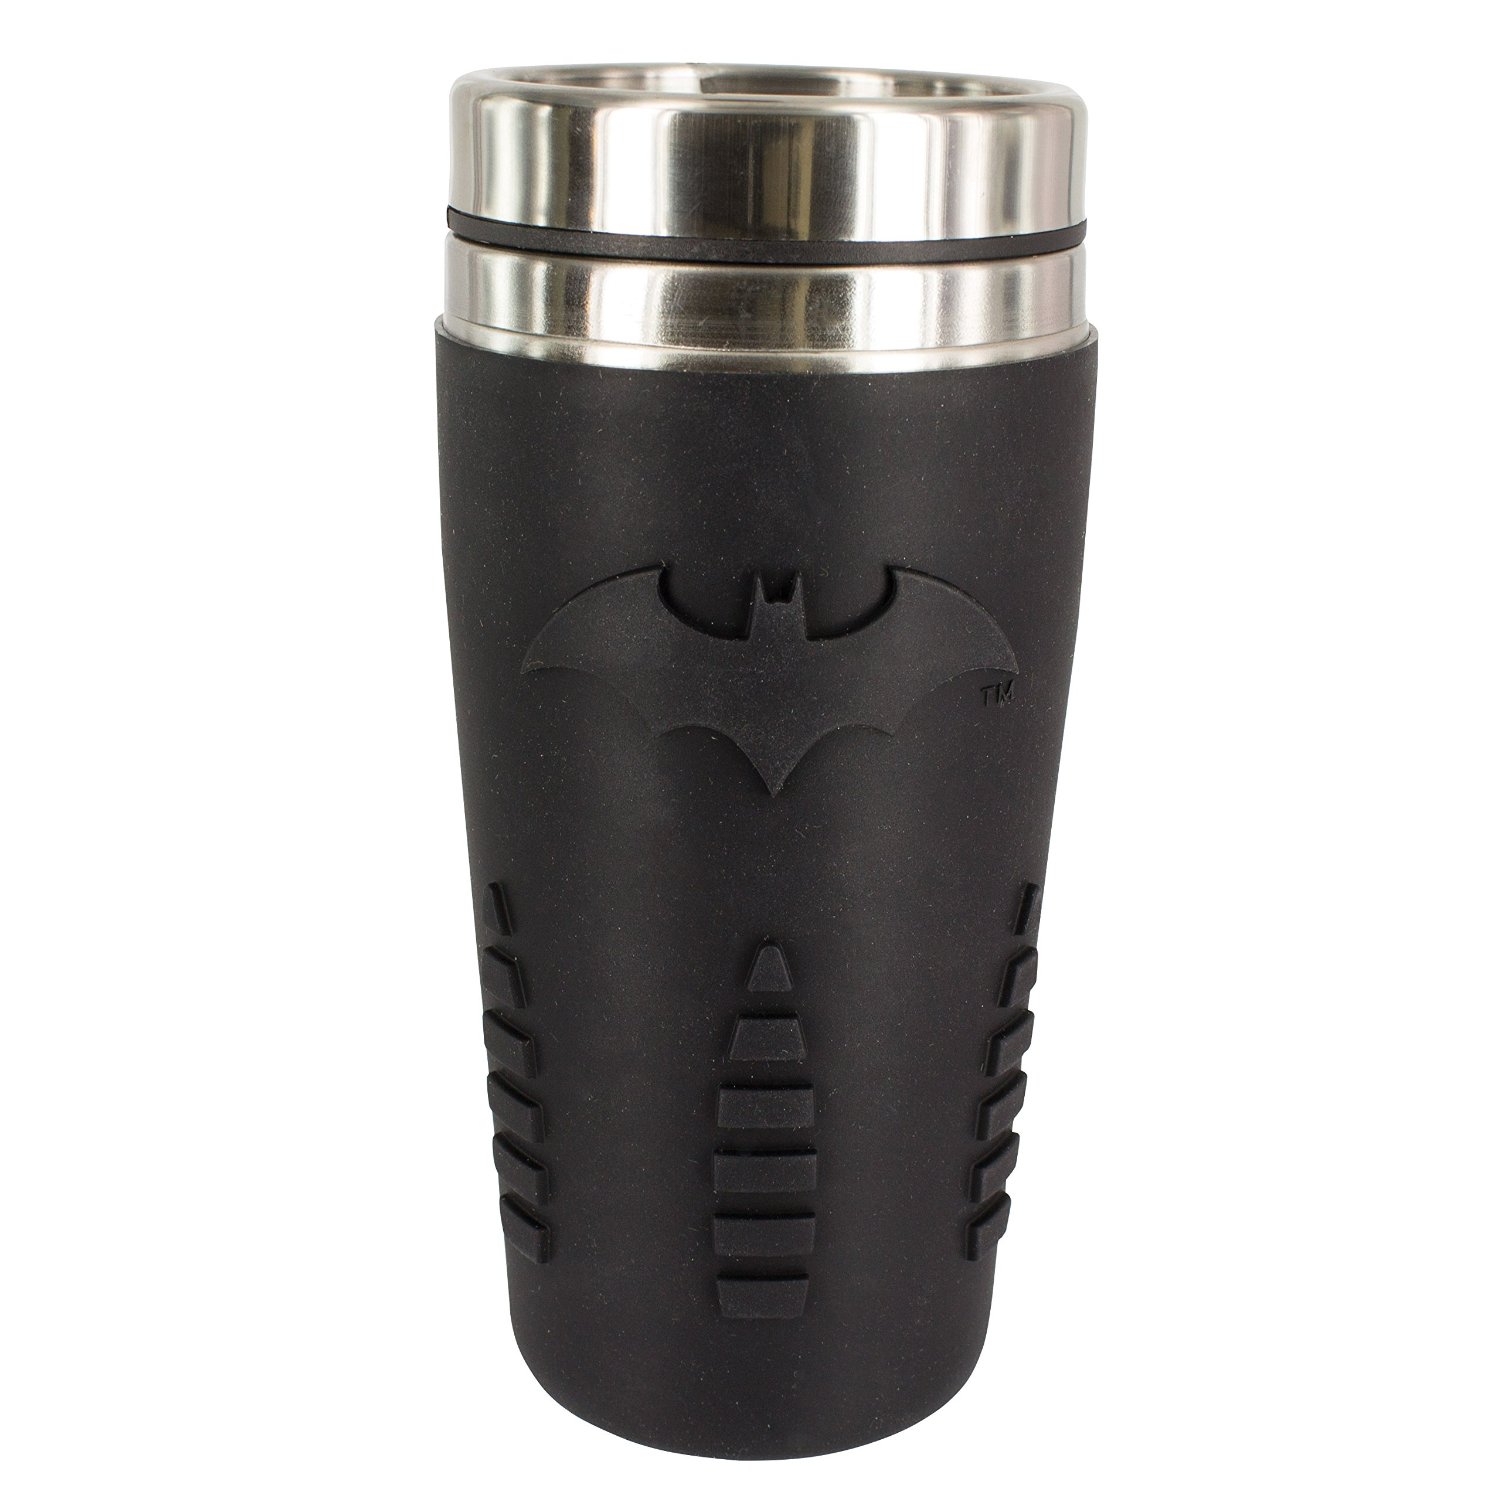 Thermal mug - official Batman merchandise